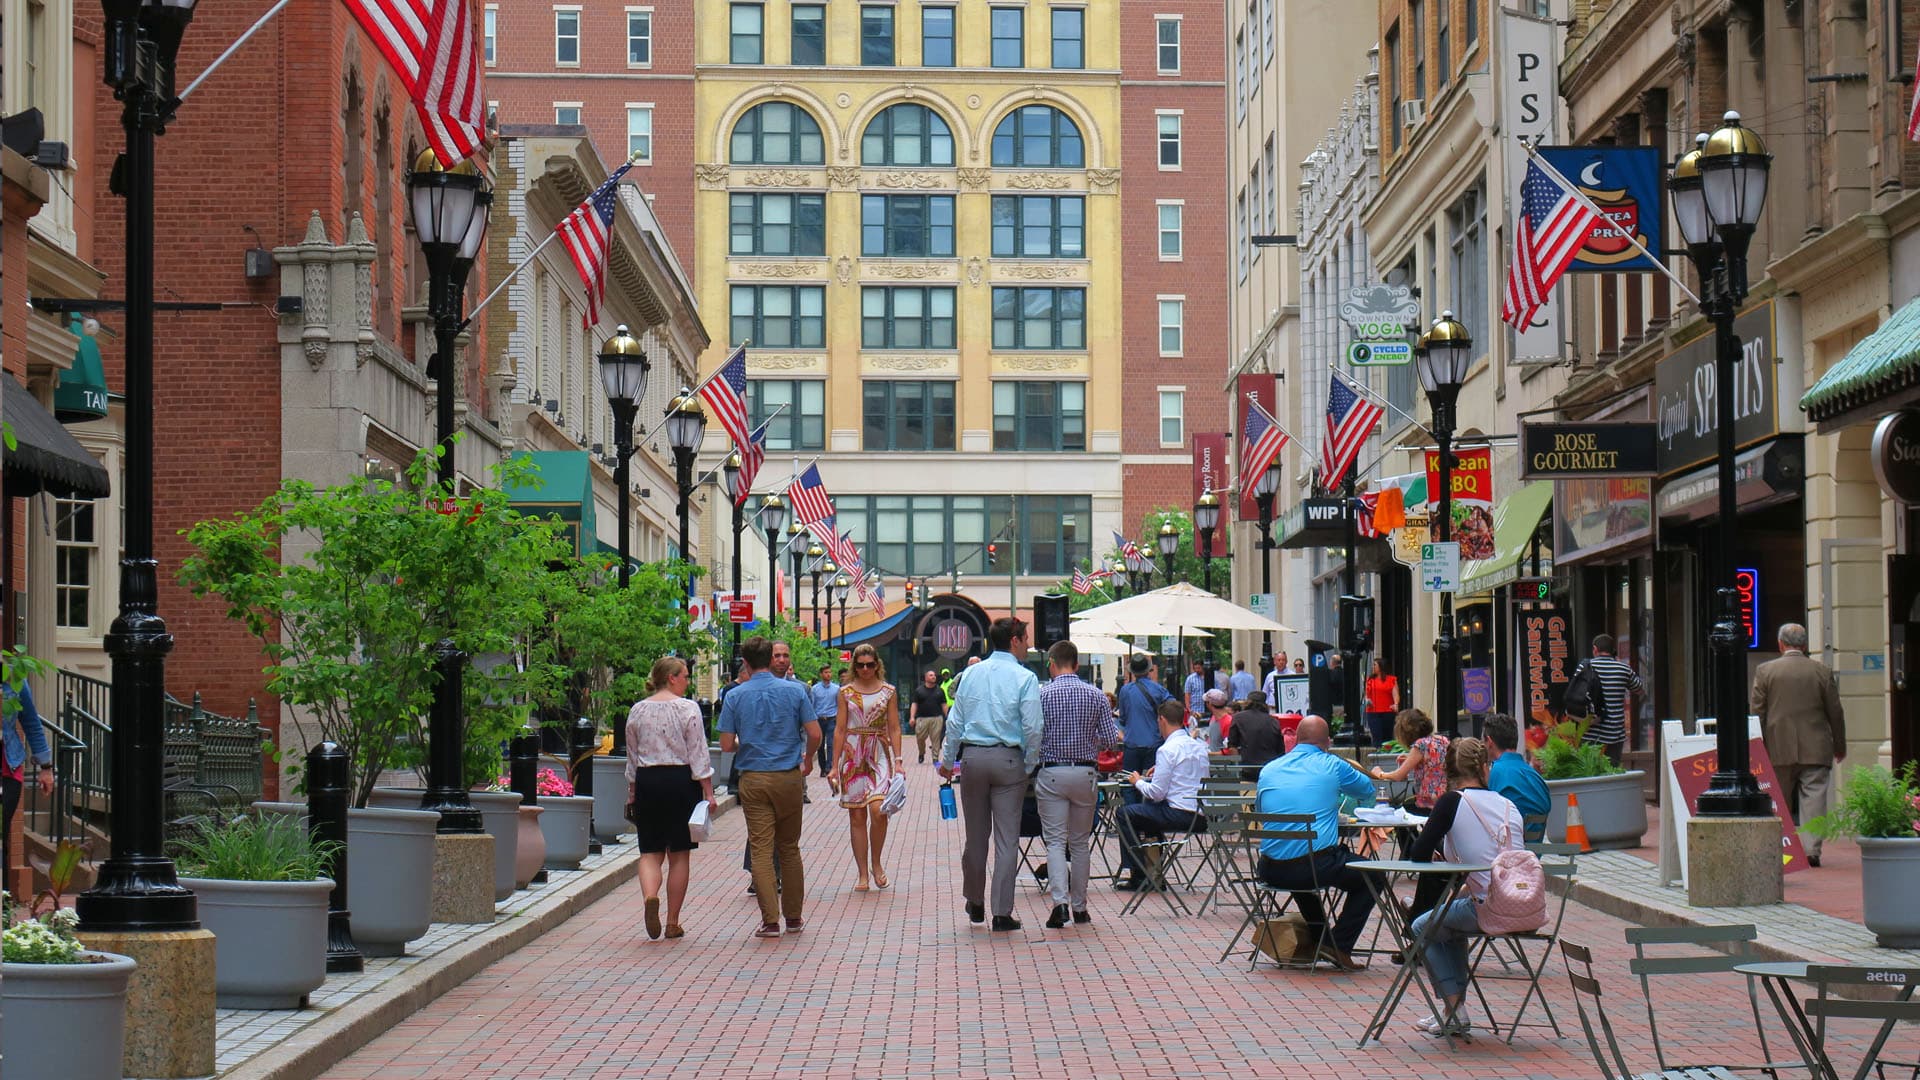 People walking down a pedestrian street in downtown Hartford, CT.
